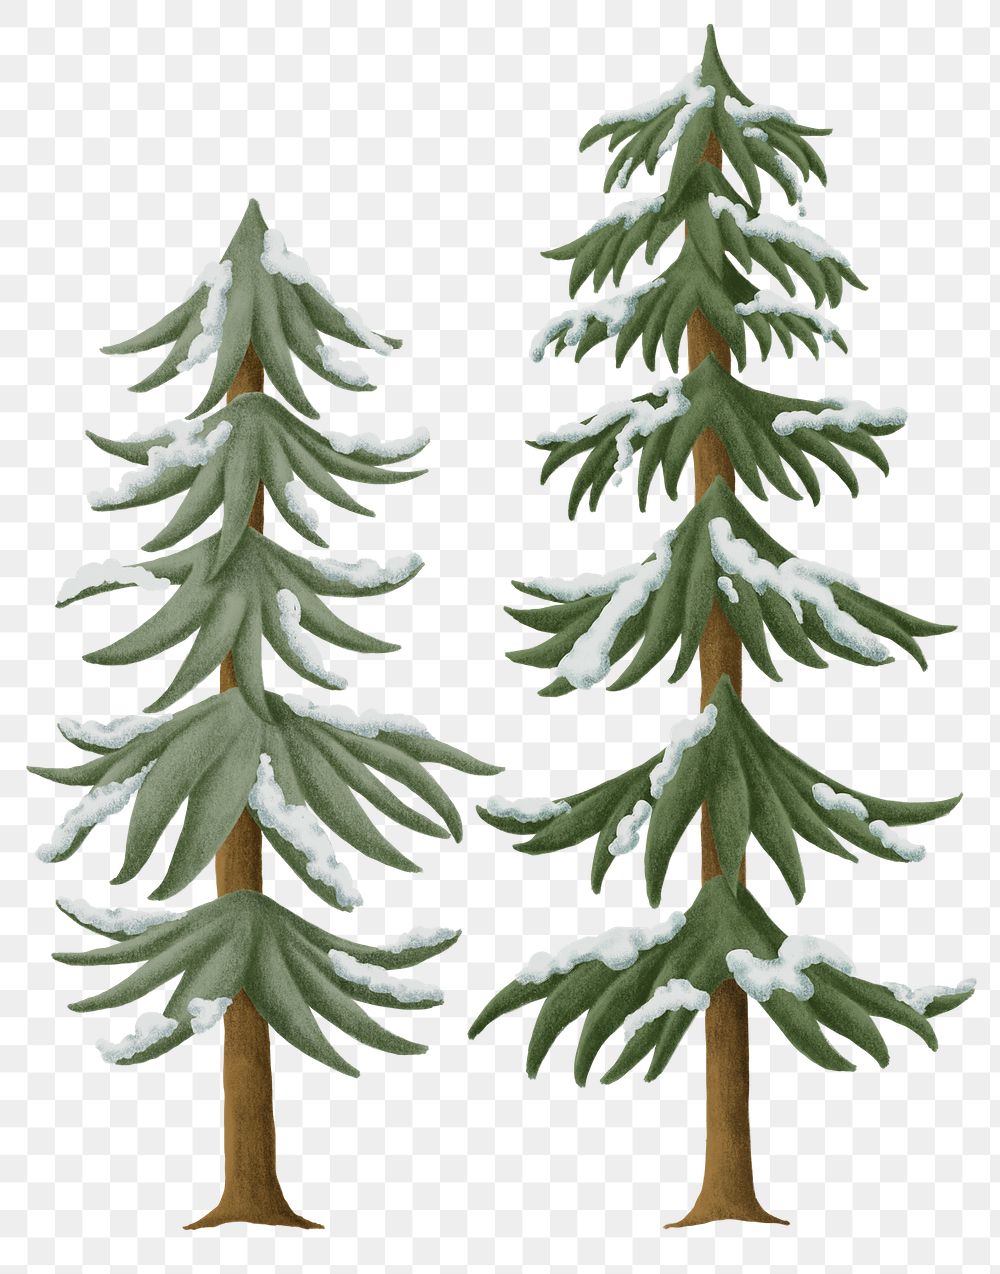 Winter pine tree png sticker Christmas season set